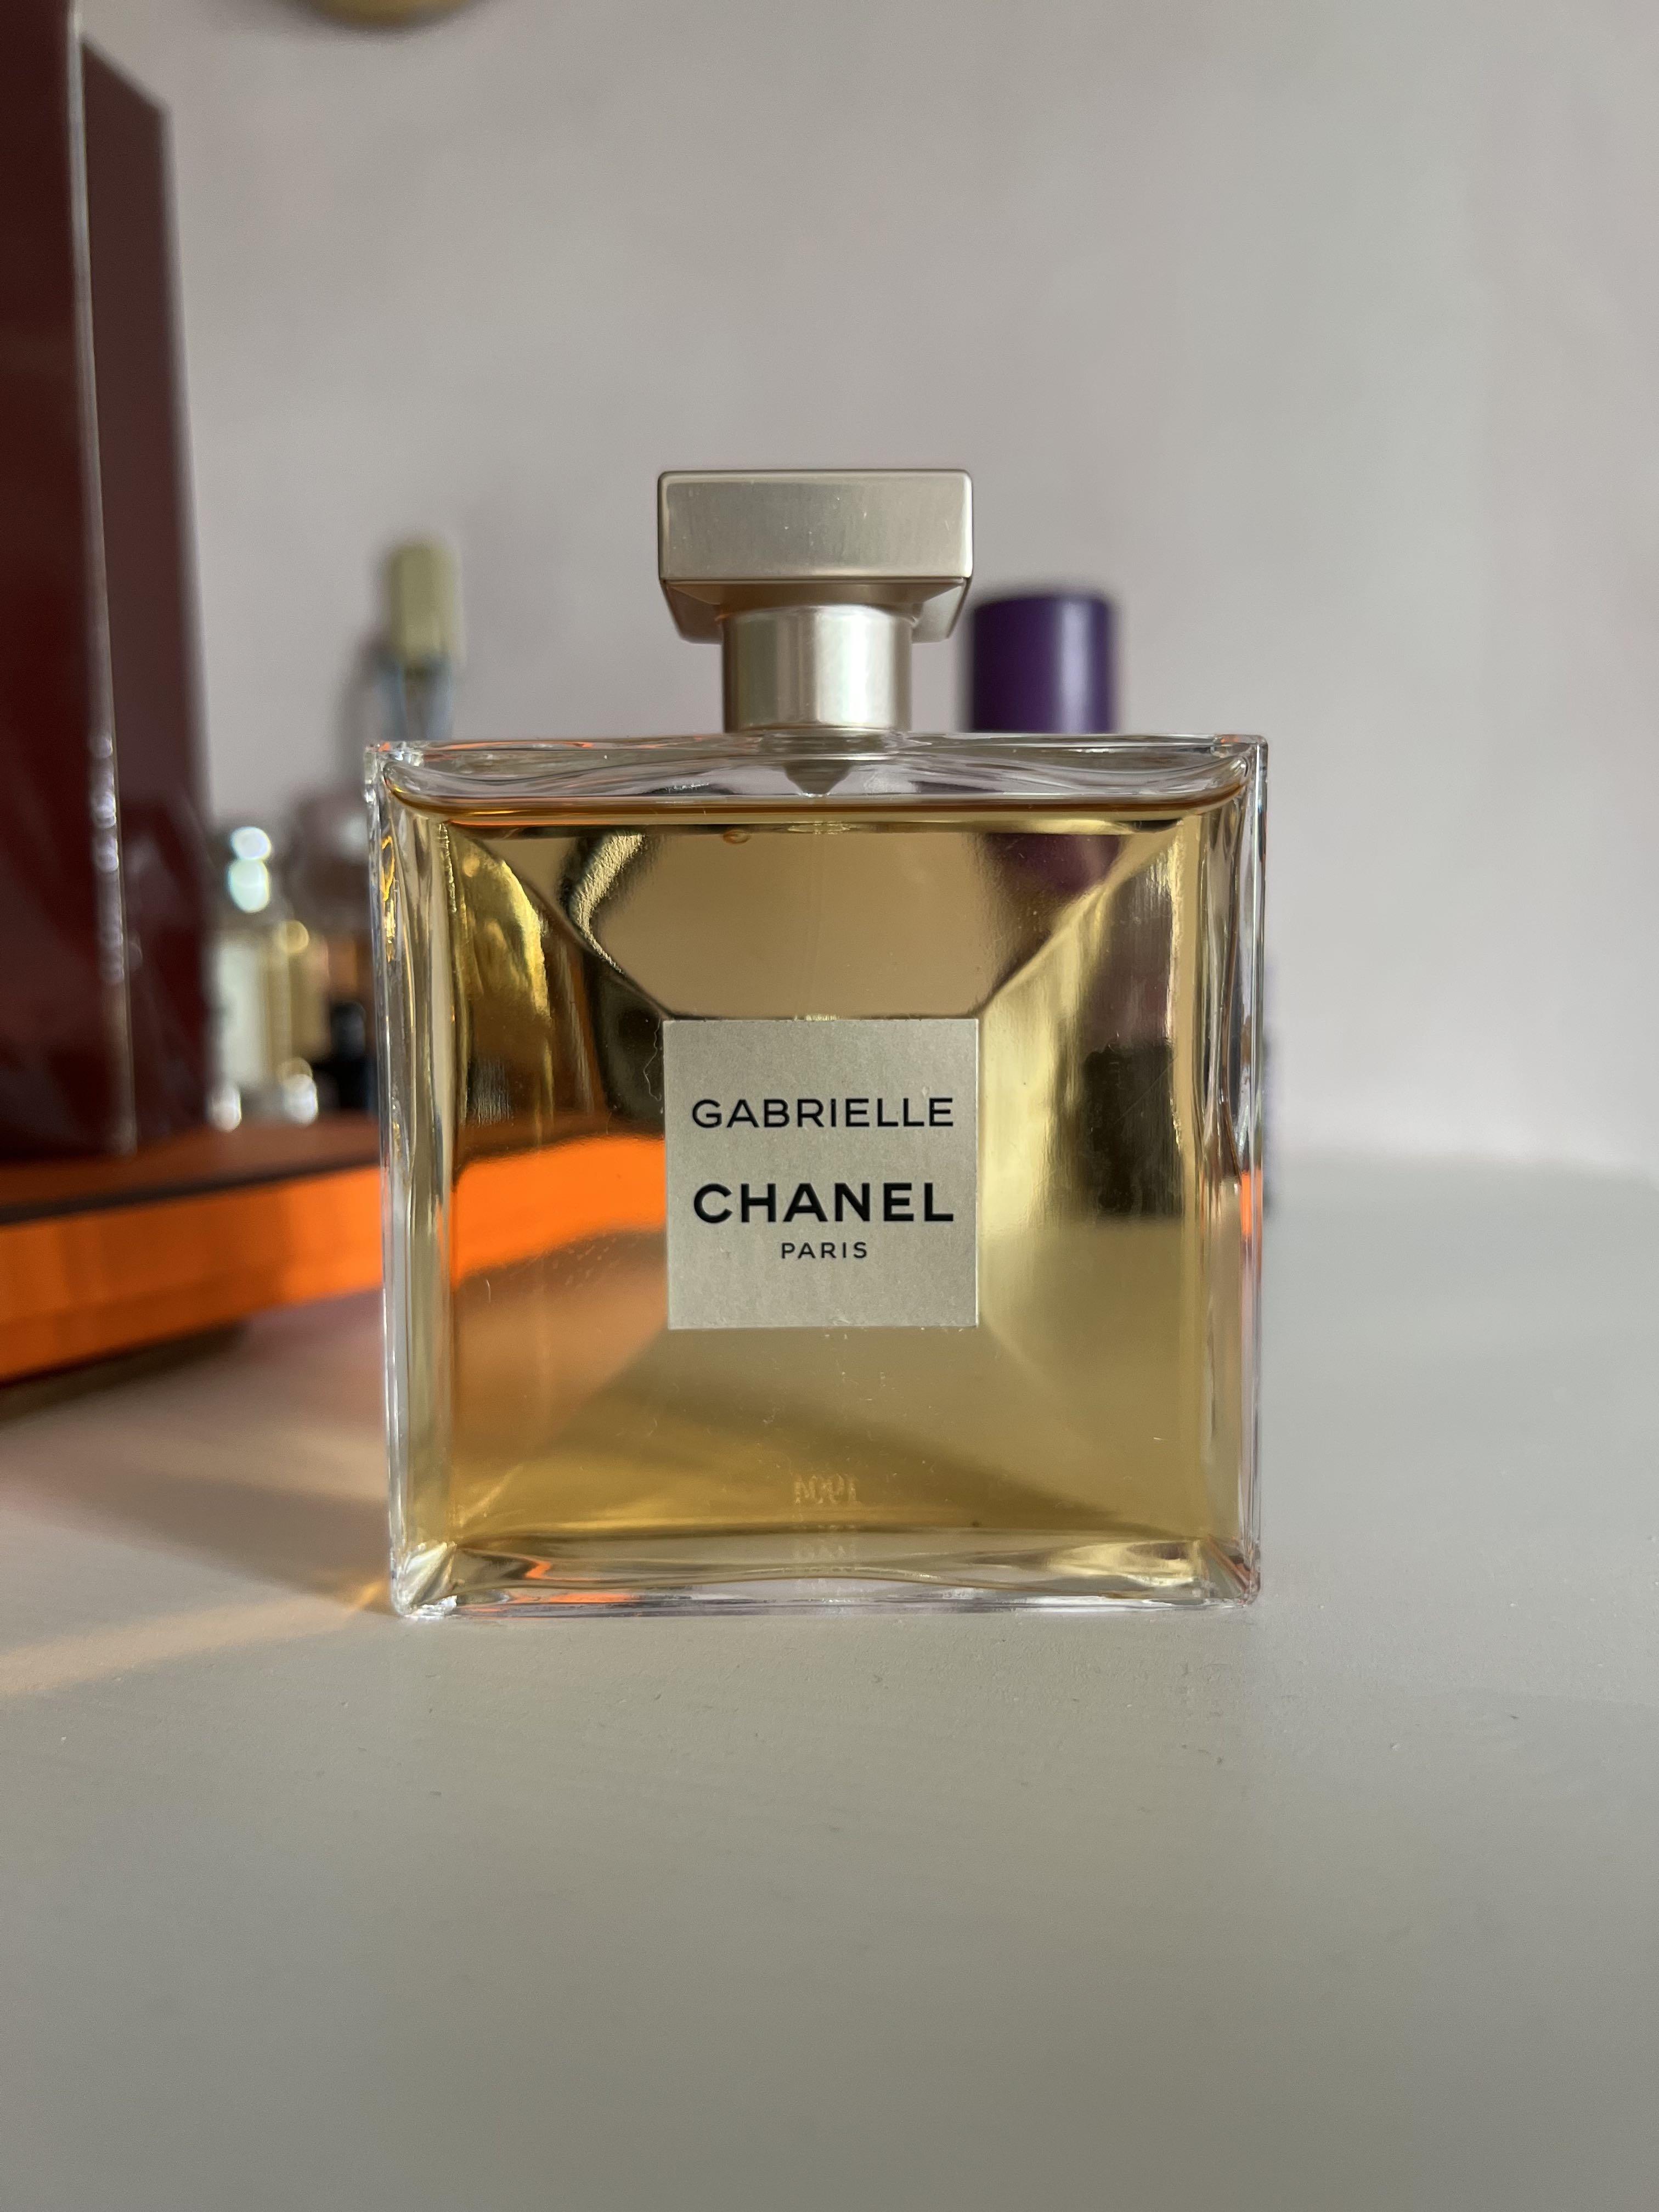 CHANEL GABRIELLE CHANEL Eau De Parfum Spray